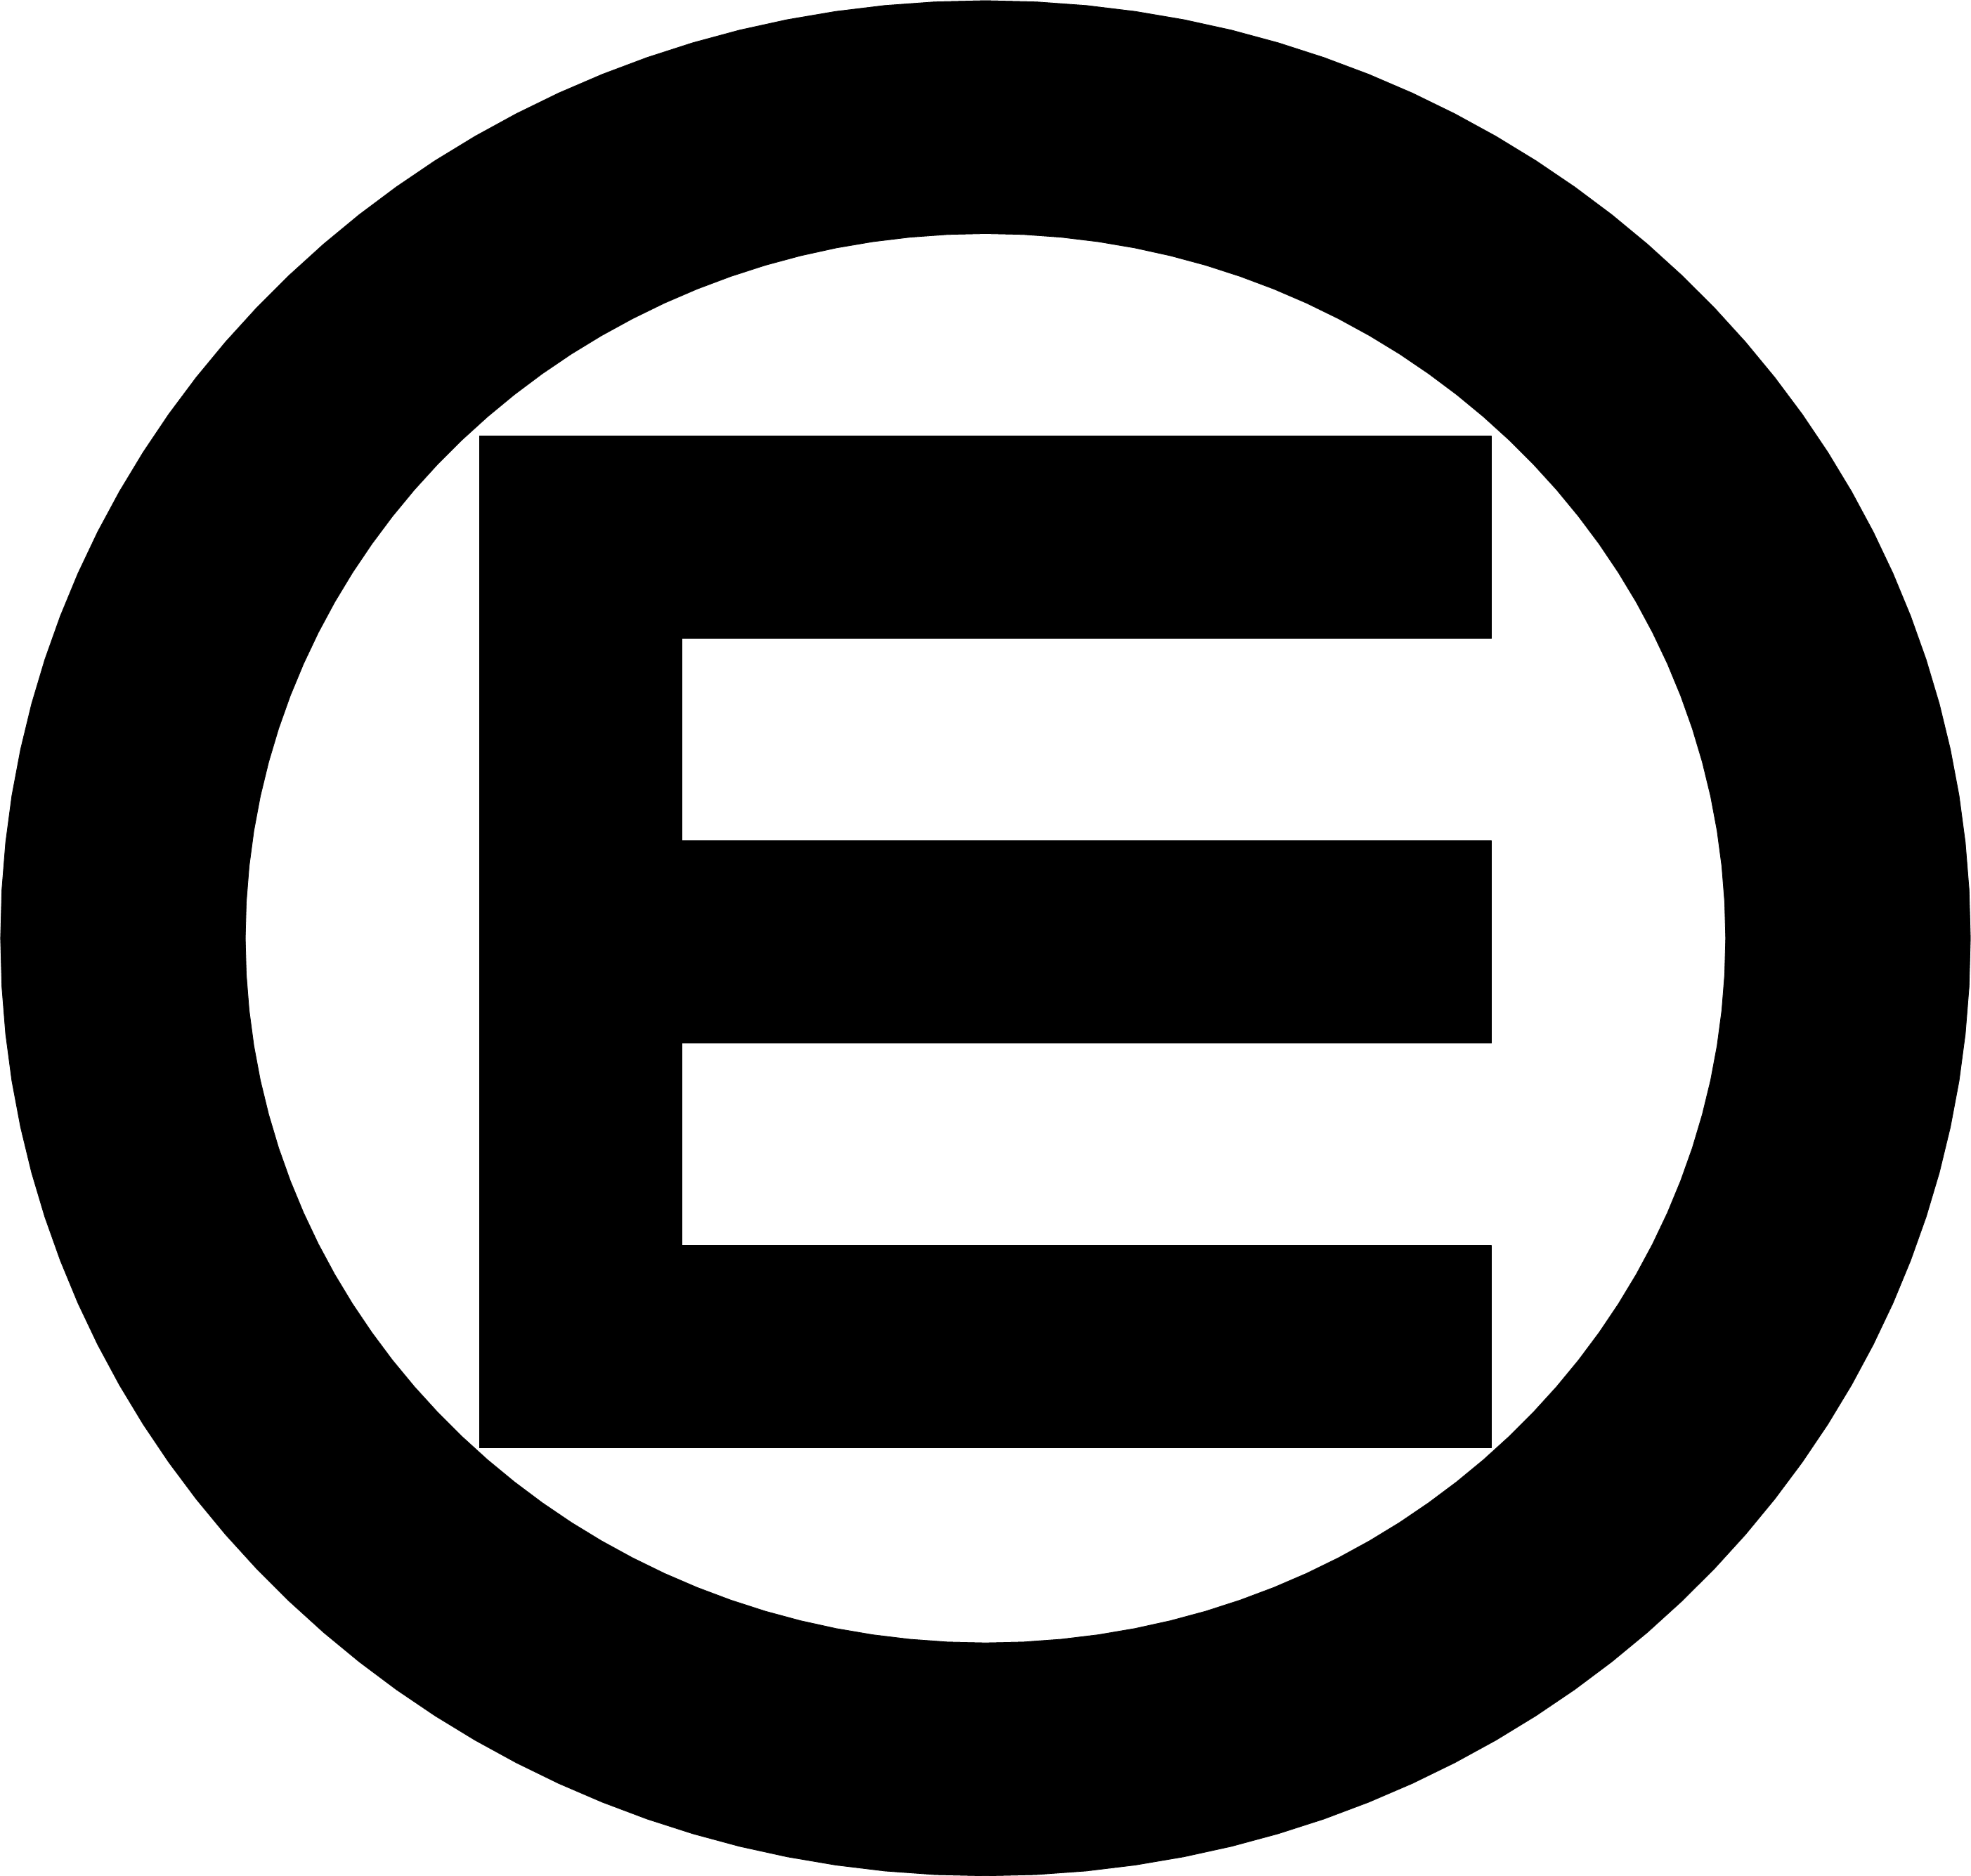 B Black Circle Logo - Egalitarian and equality logo.png